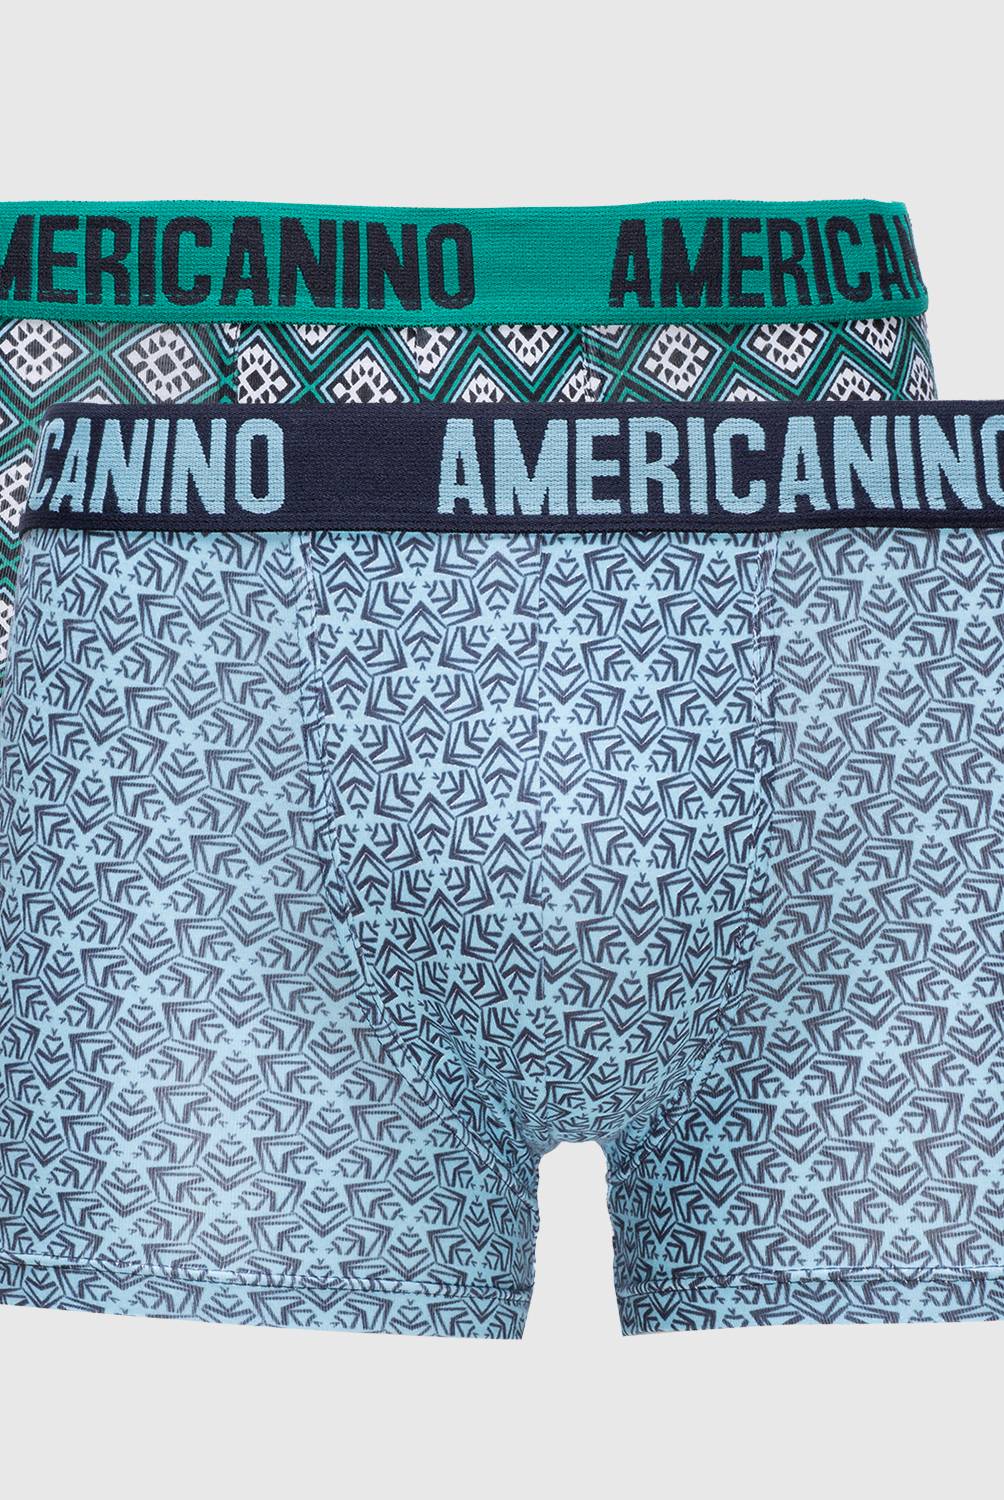 AMERICANINO - Americanino Pack de 2 Boxer de Algodón Hombre